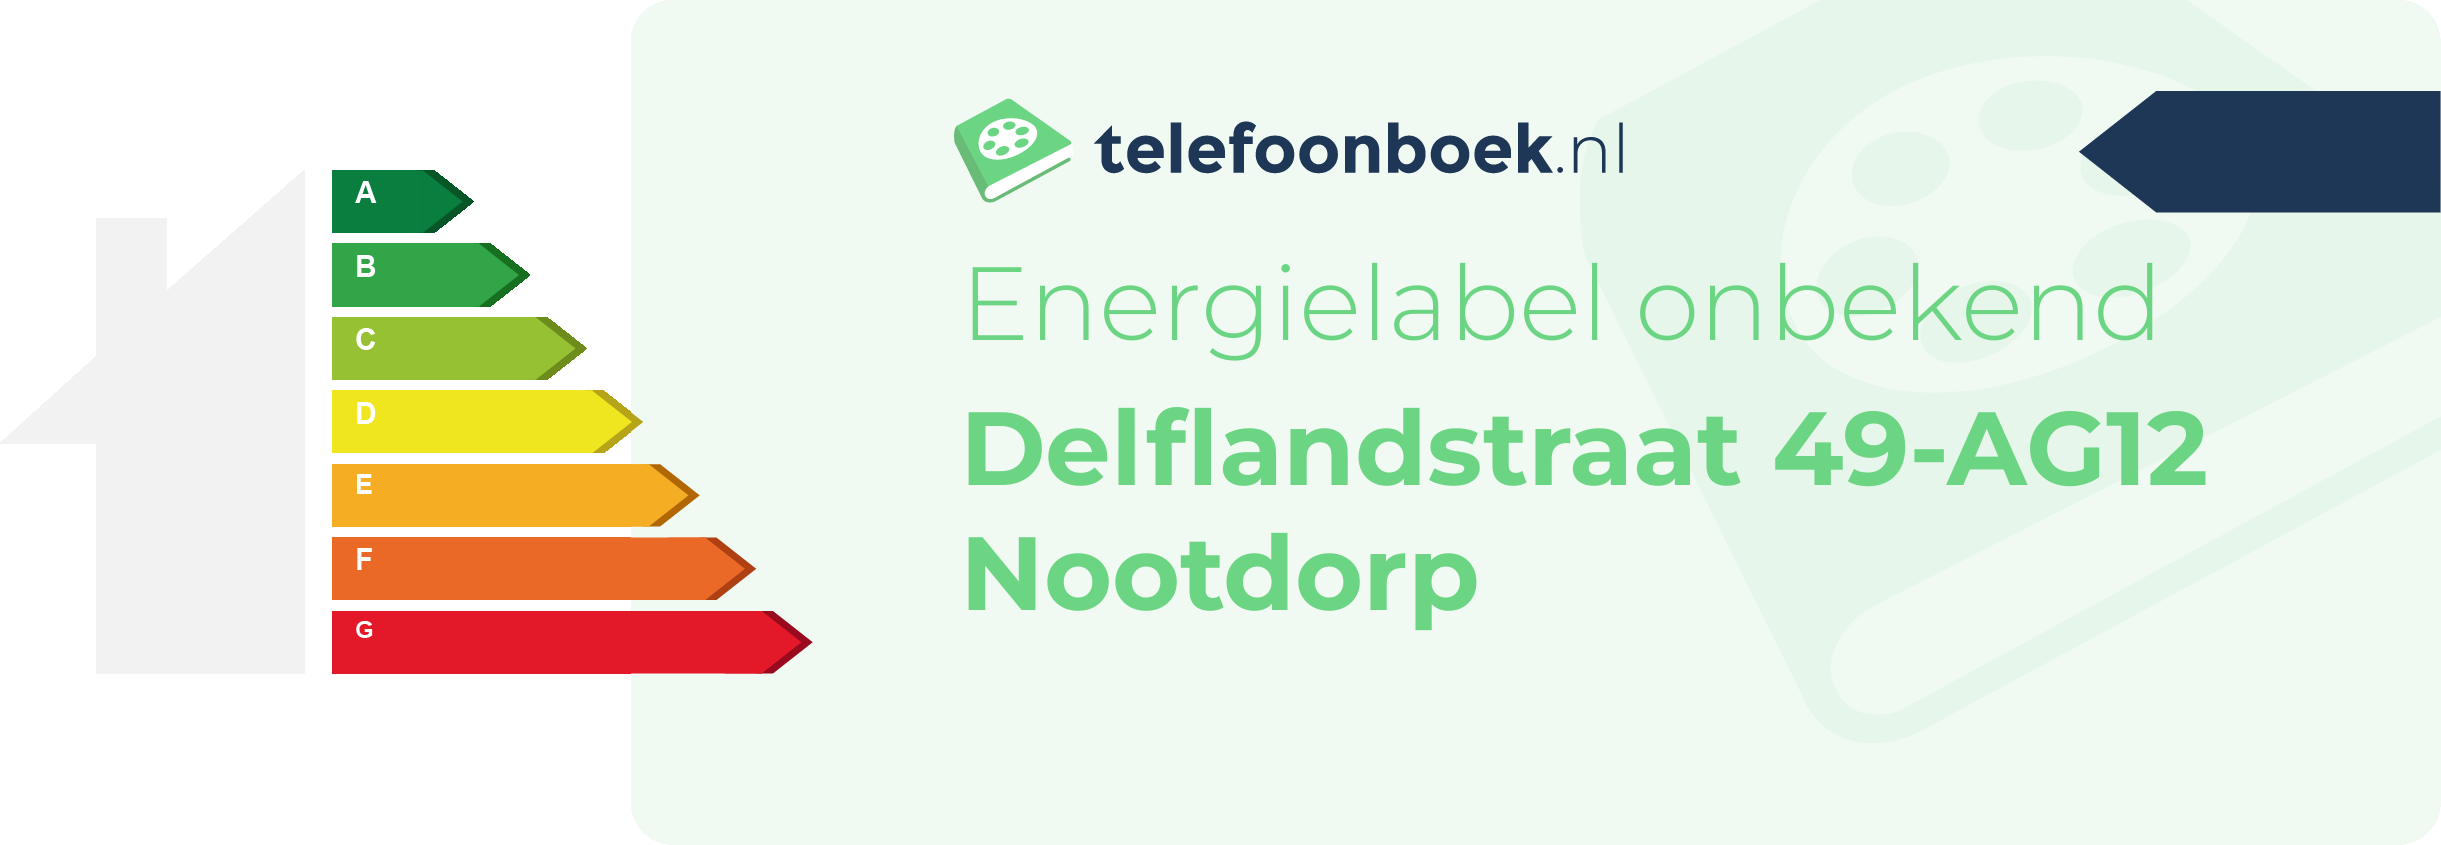 Energielabel Delflandstraat 49-AG12 Nootdorp